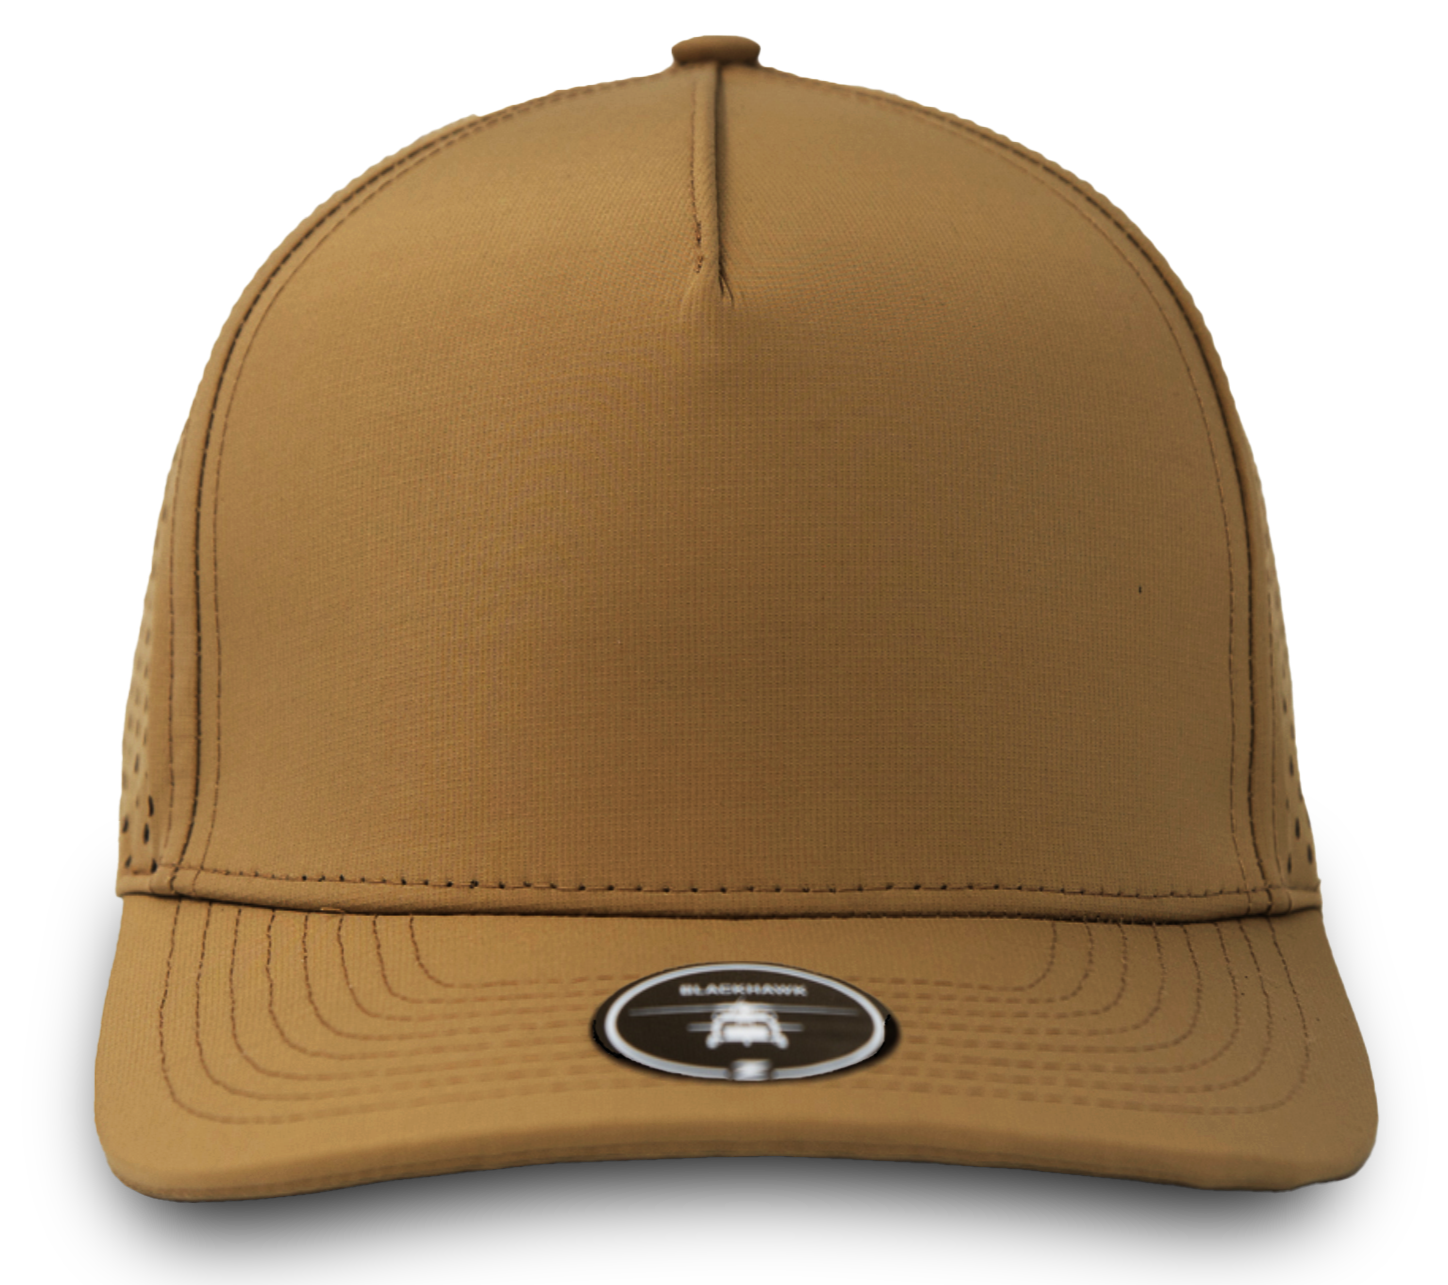 Blackhawk Custom Hat caramel 5 panel snapback hat